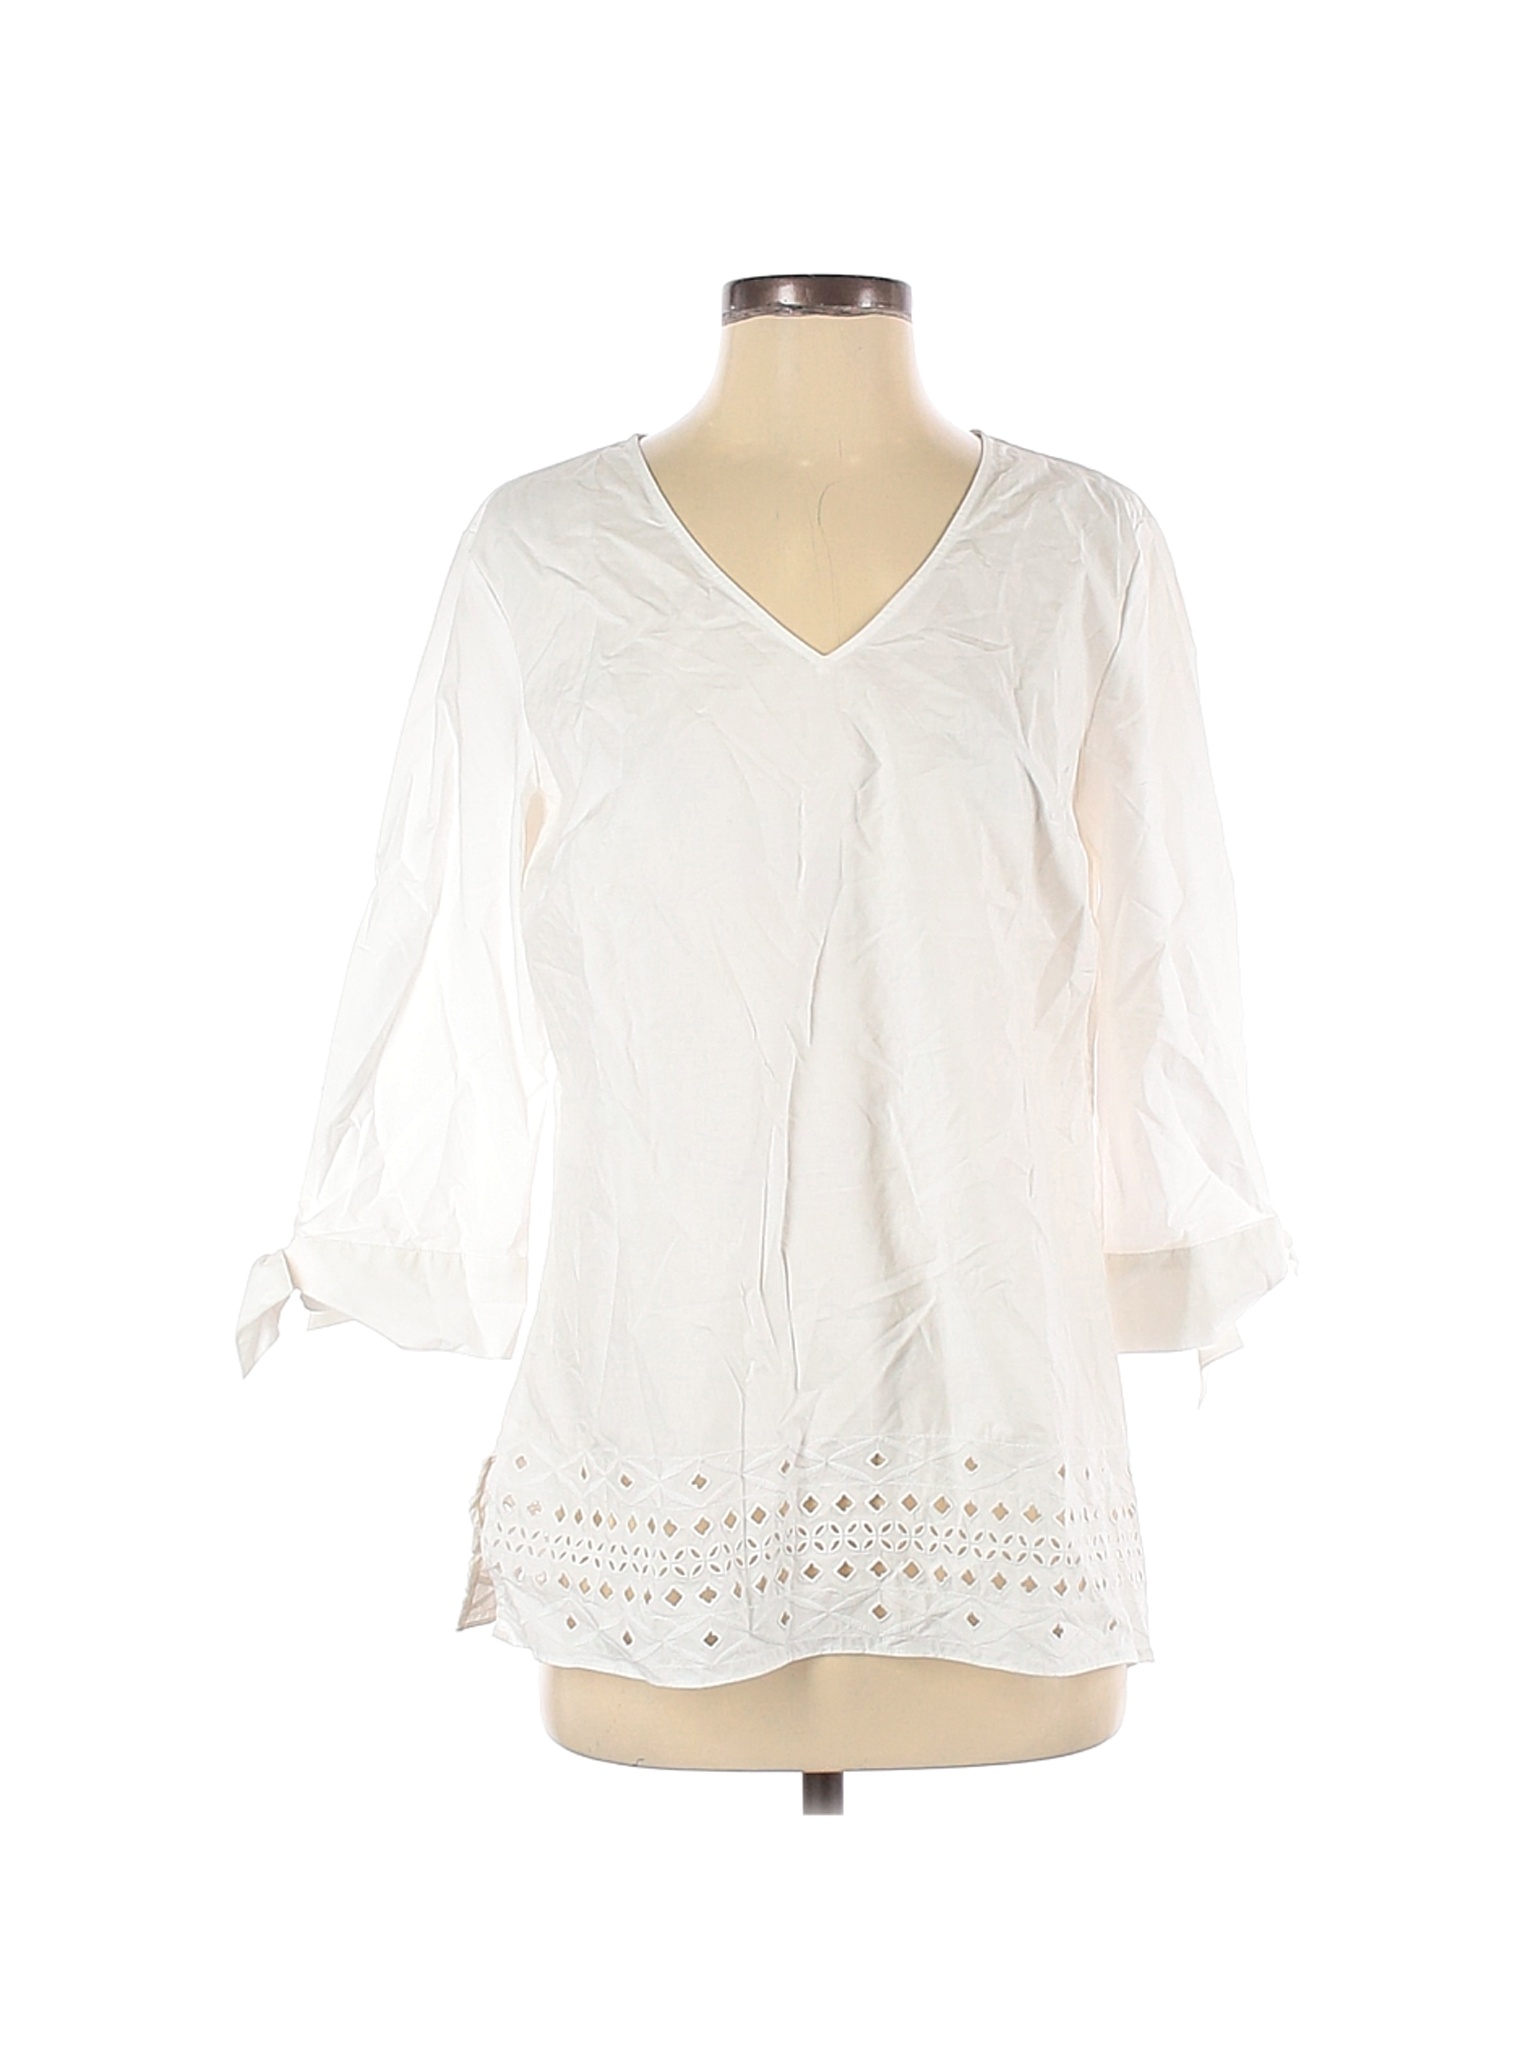 NWT Talbots Women White Long Sleeve Blouse S | eBay